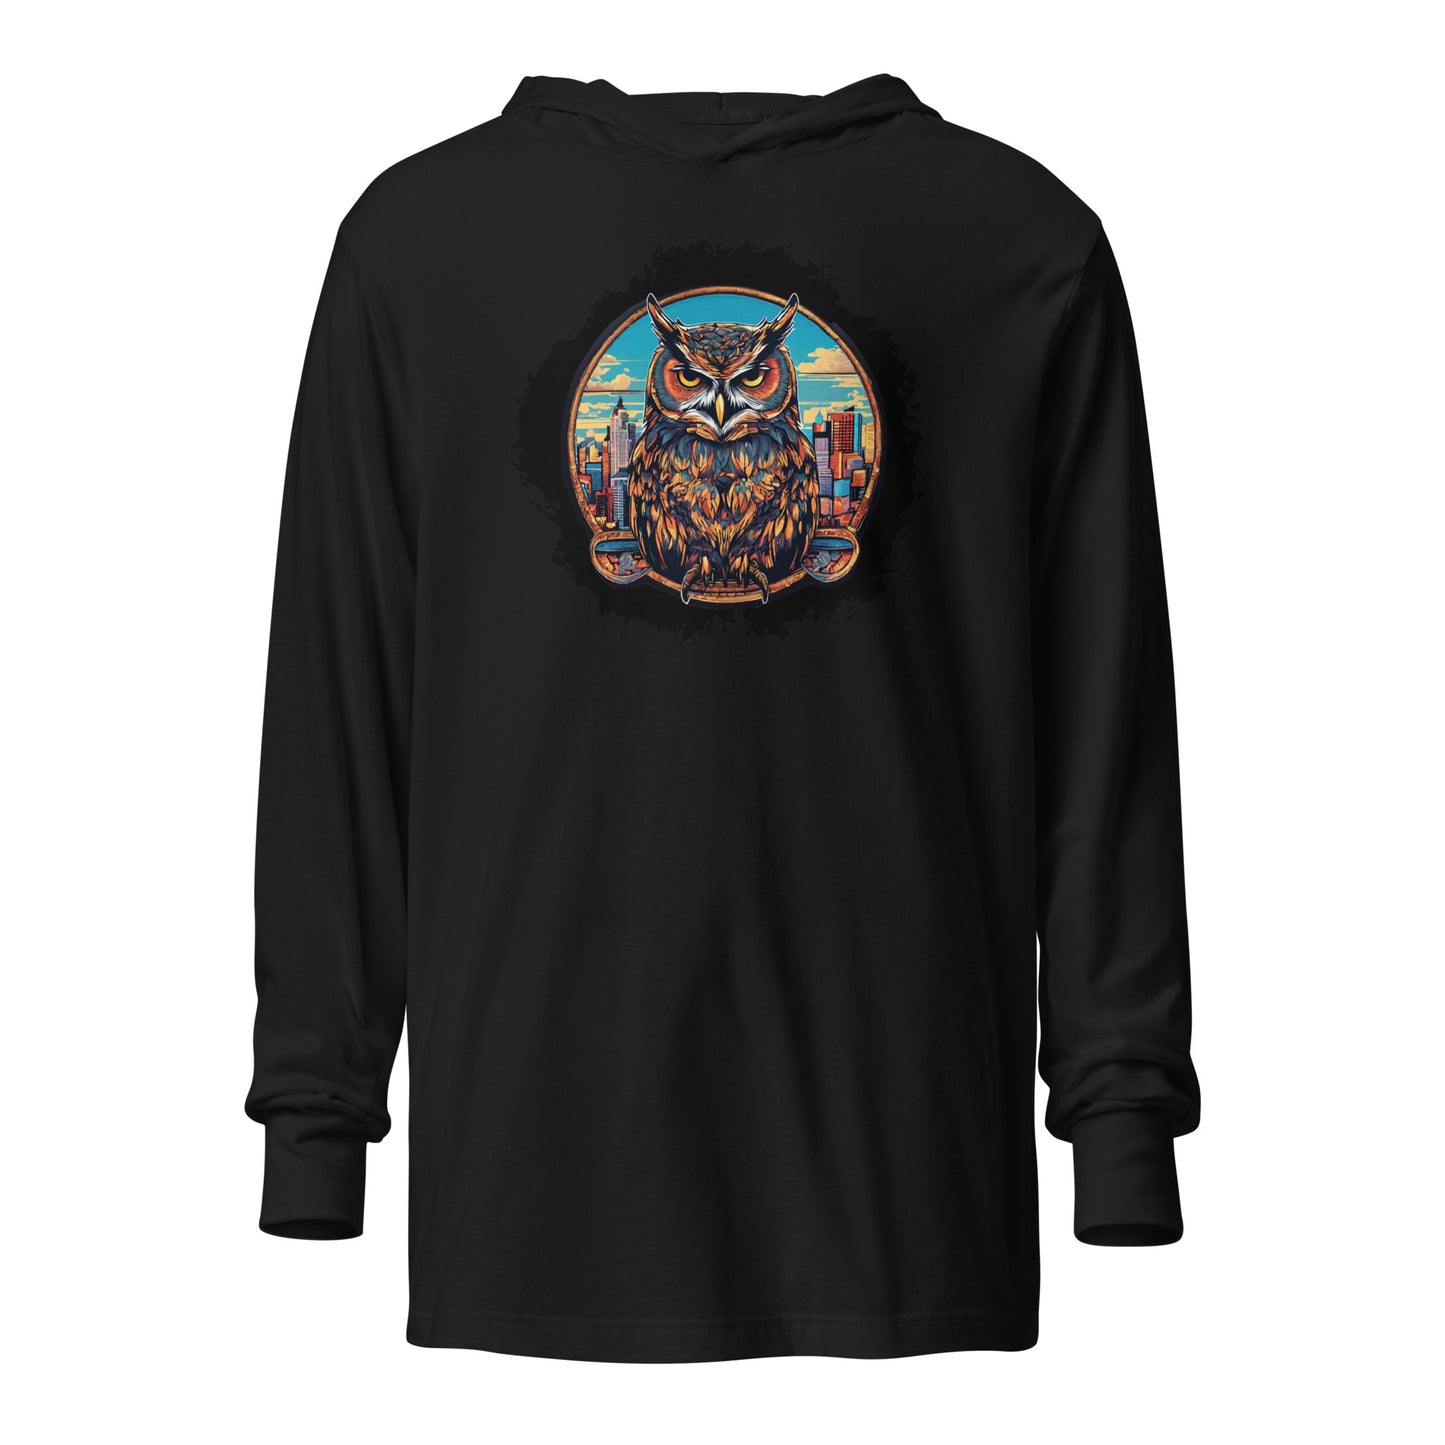 Owl in the City Emblem Hooded Long-Sleeve Tee Black